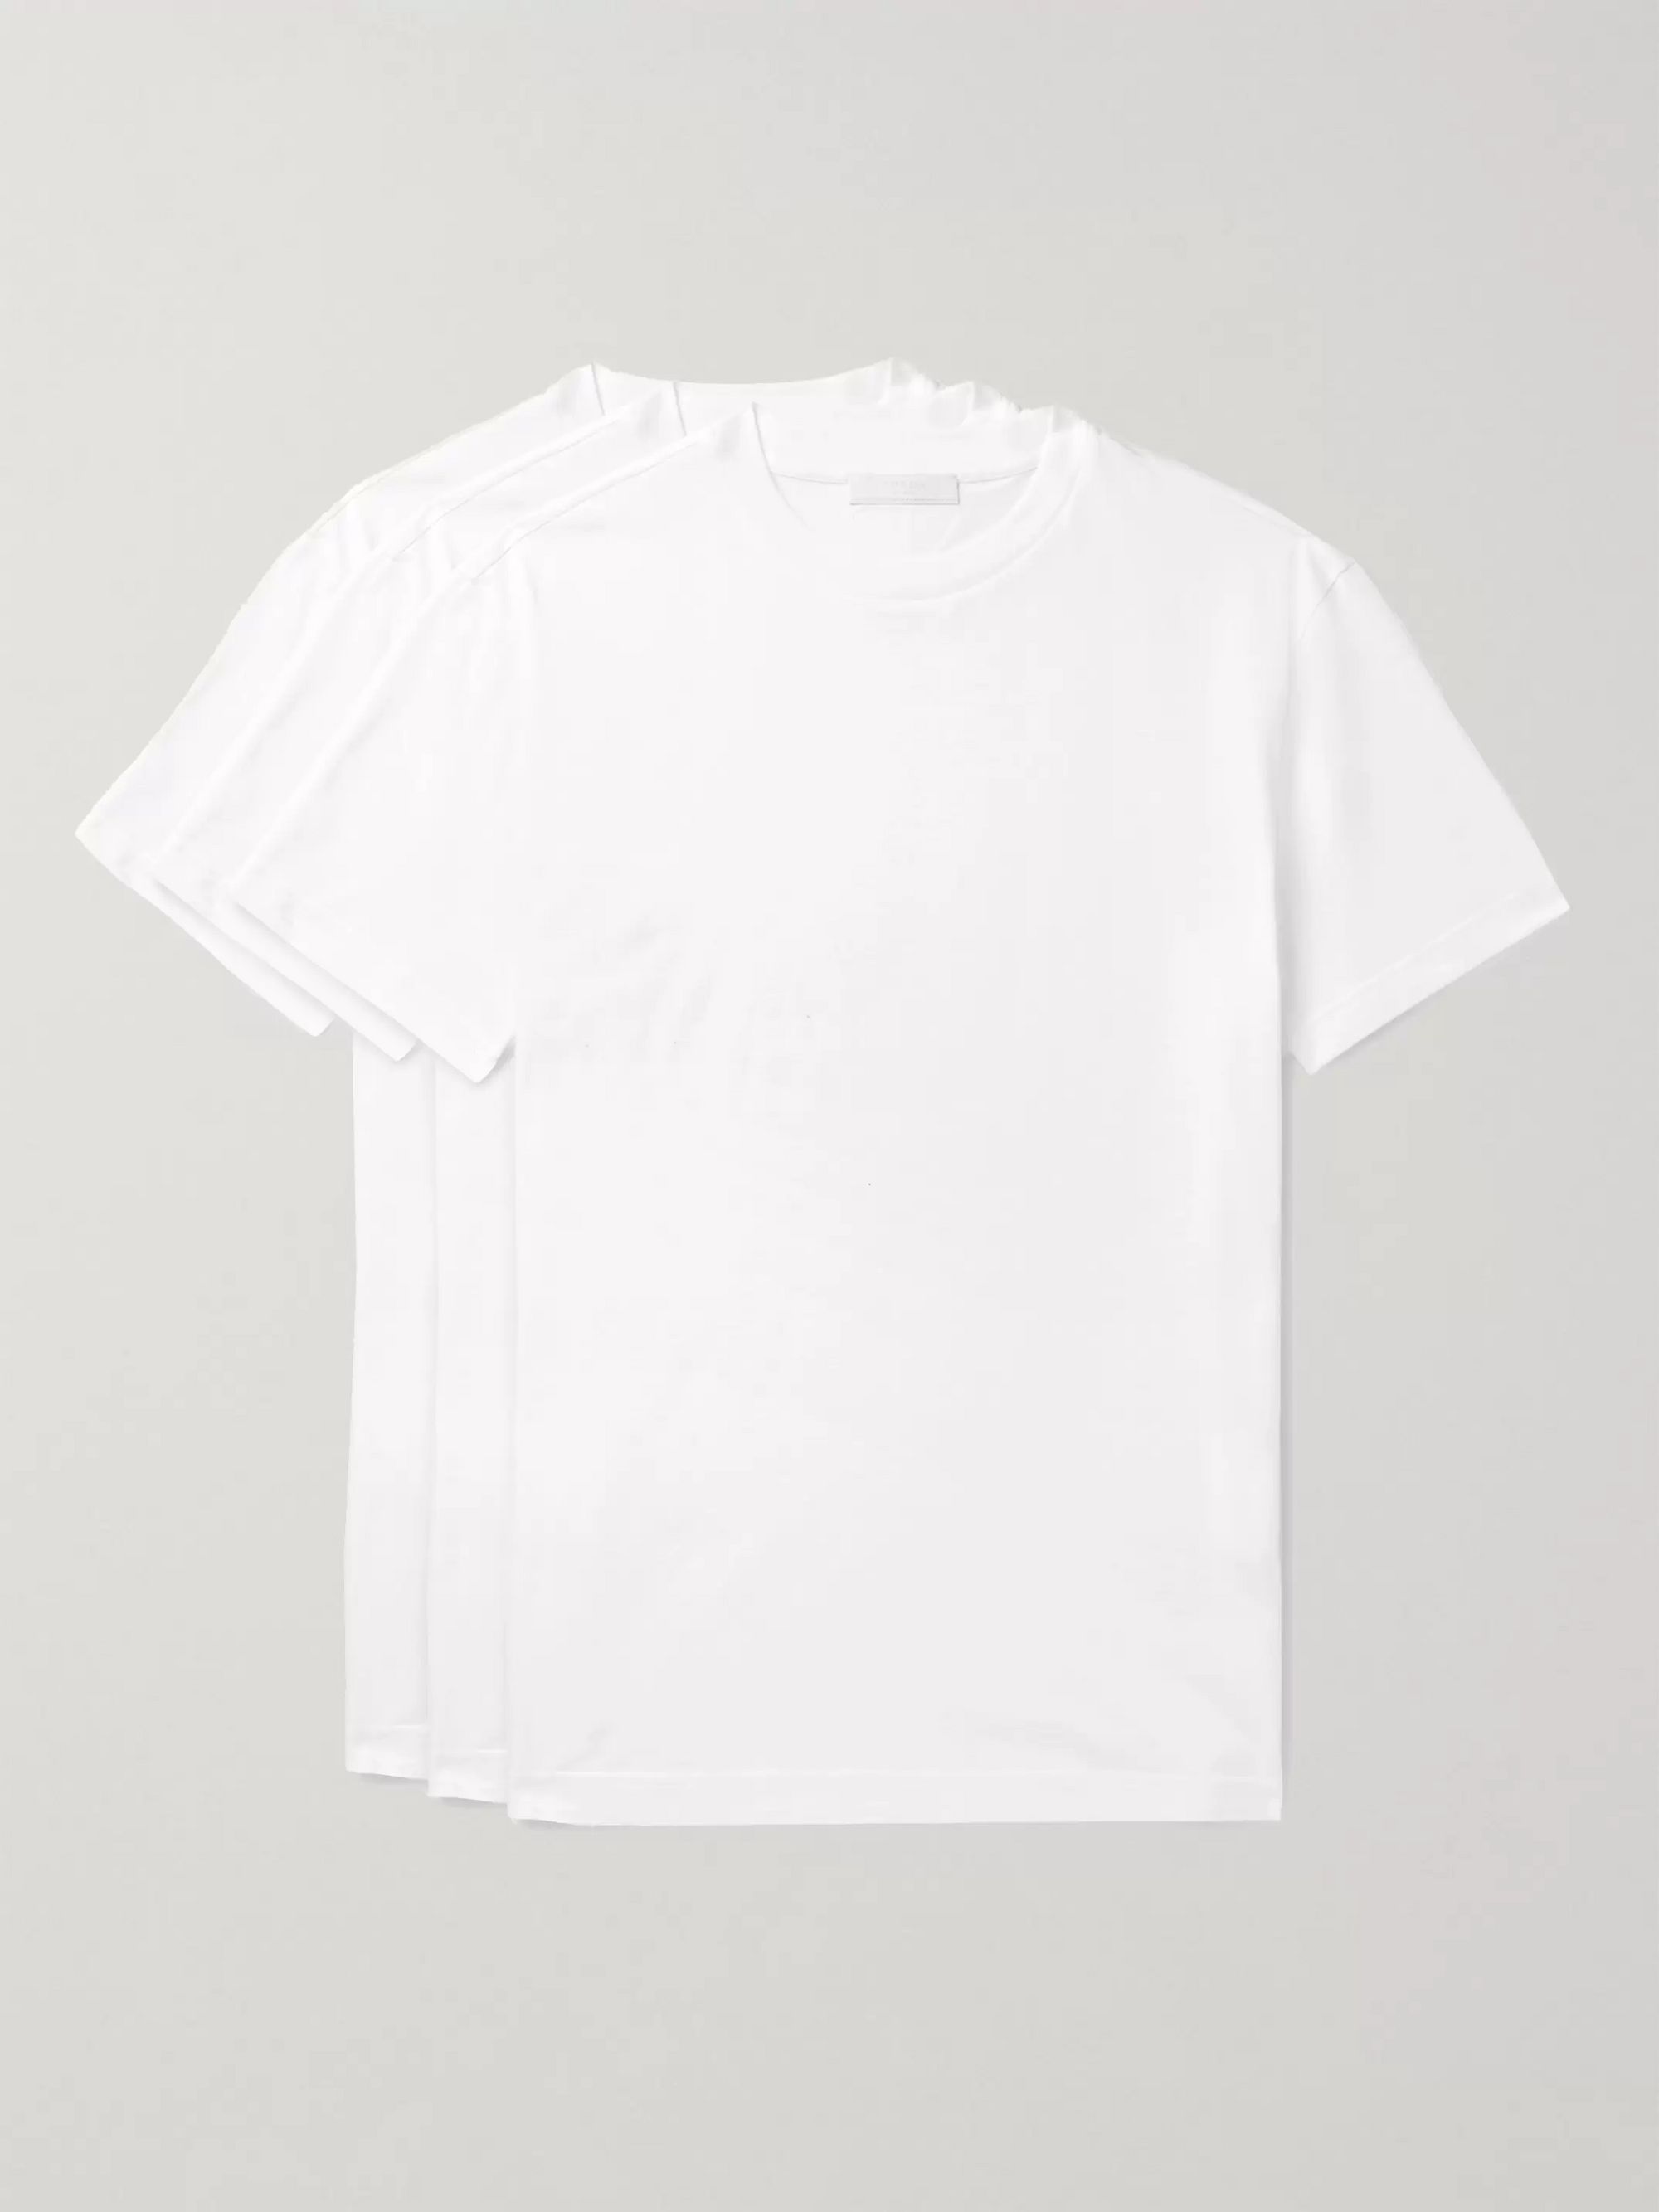 prada white t shirt